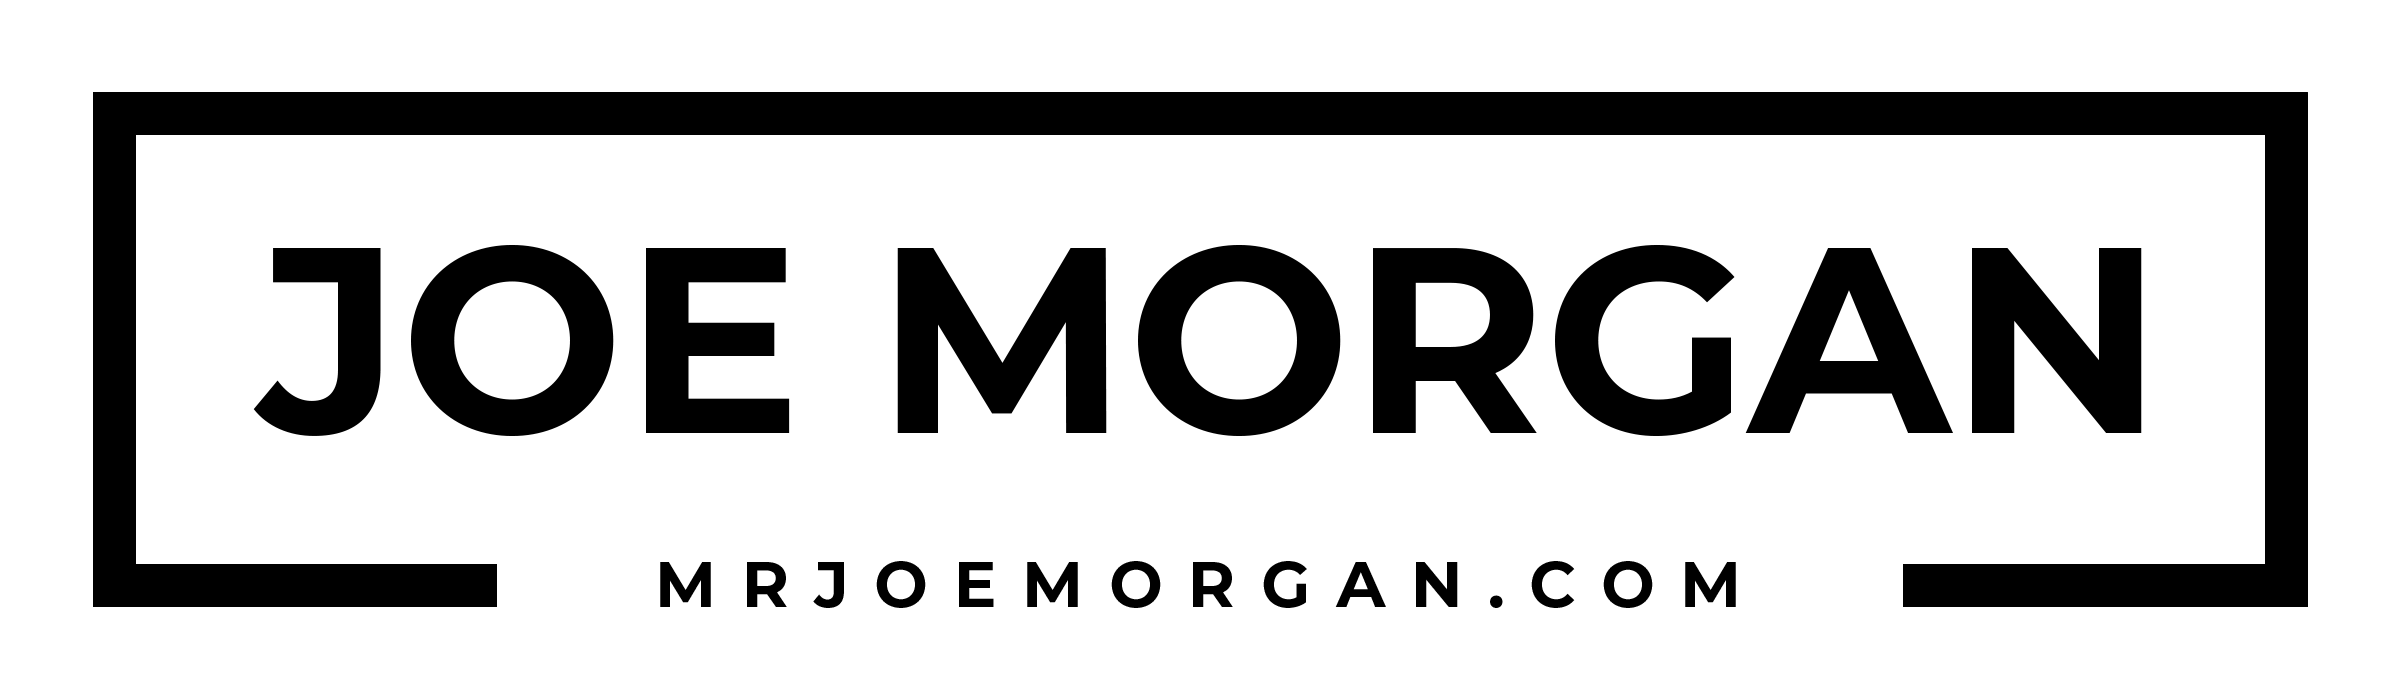 Joe Morgan – Marketing Consultant, Experience Designer, Photographer